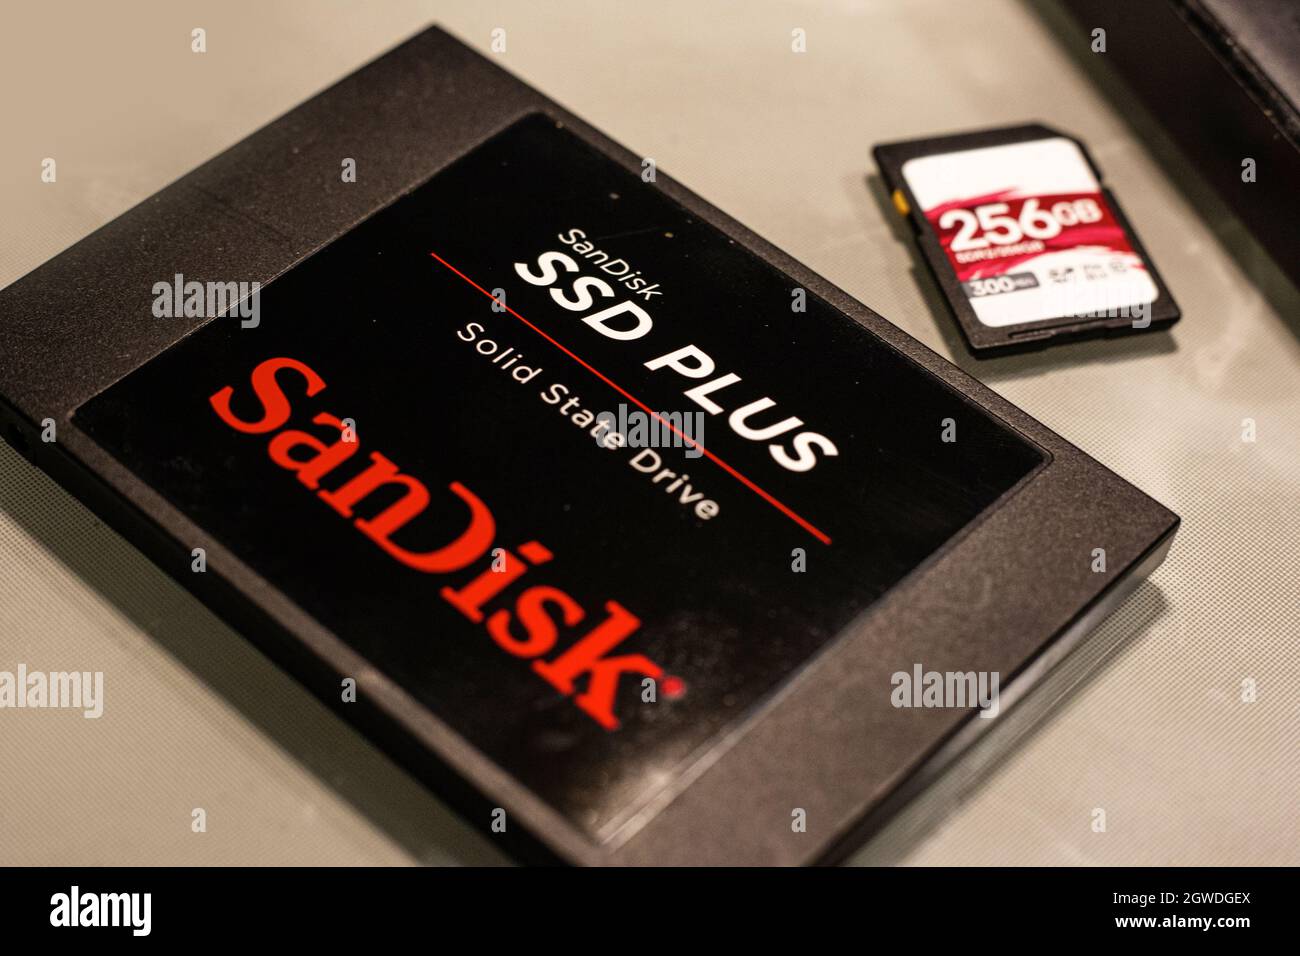 Disque dur SSD SanDisk Photo Stock - Alamy